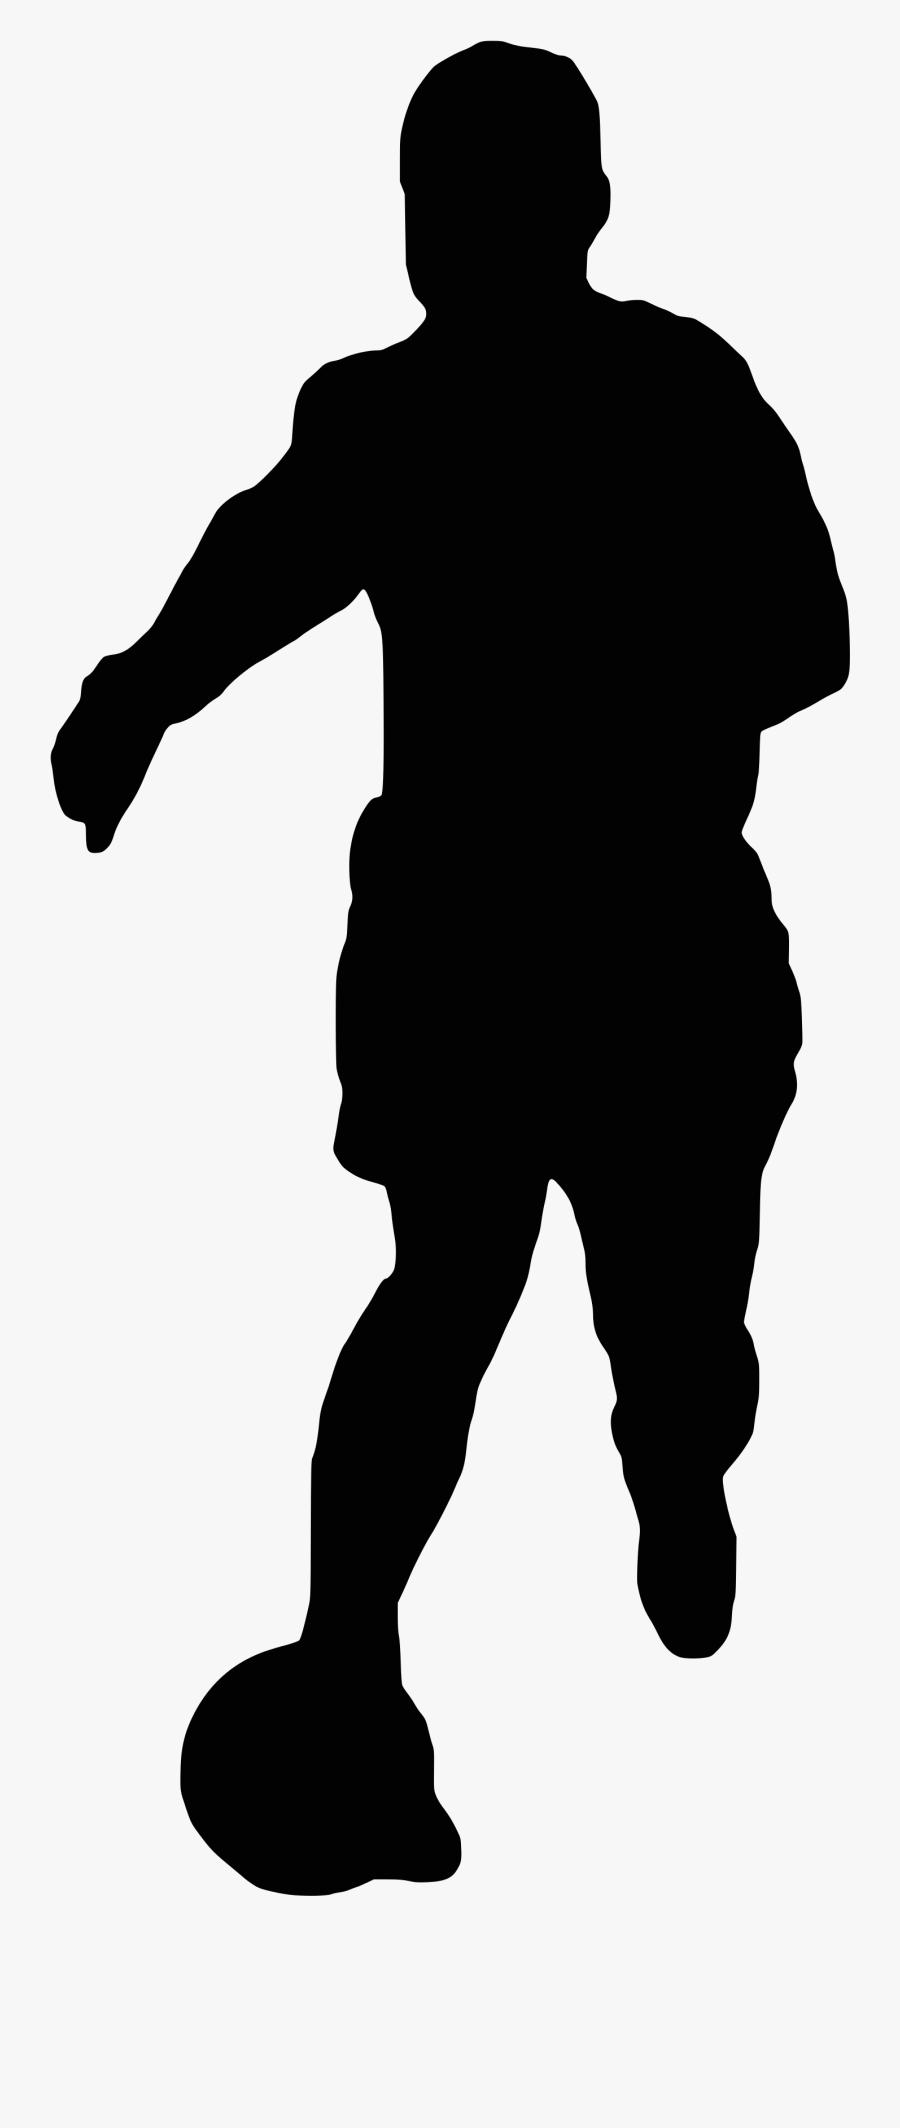 Transparent Football Player Clipart - Soccer Player Silhouette Svg, Transparent Clipart